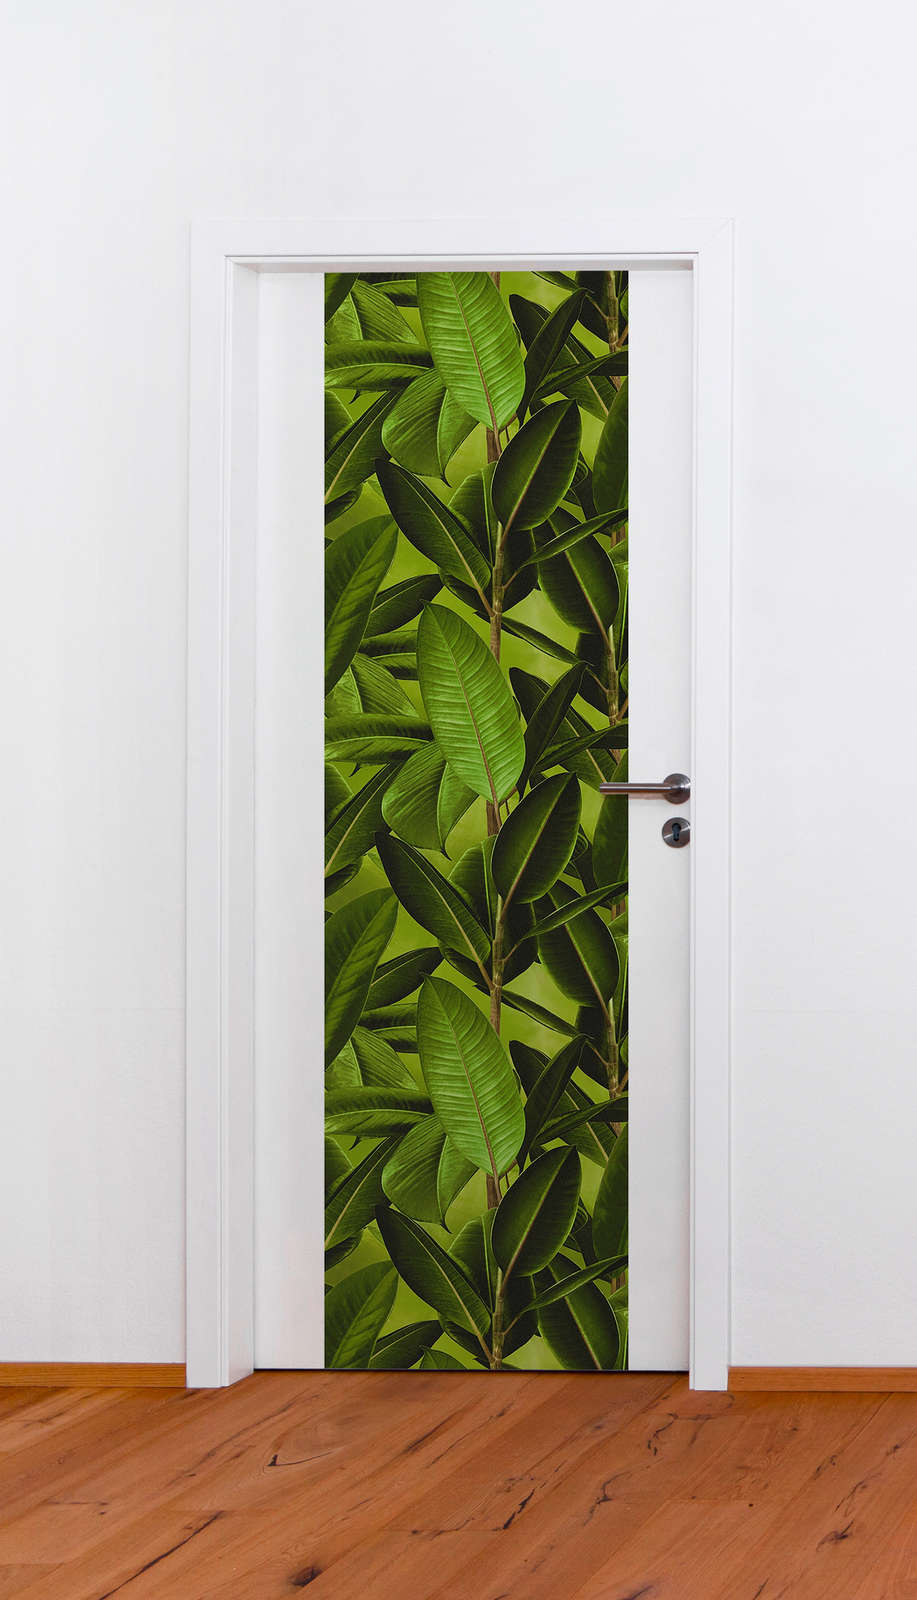             3D Tapetenpanel Blätter Design selbstklebend – Grün
        